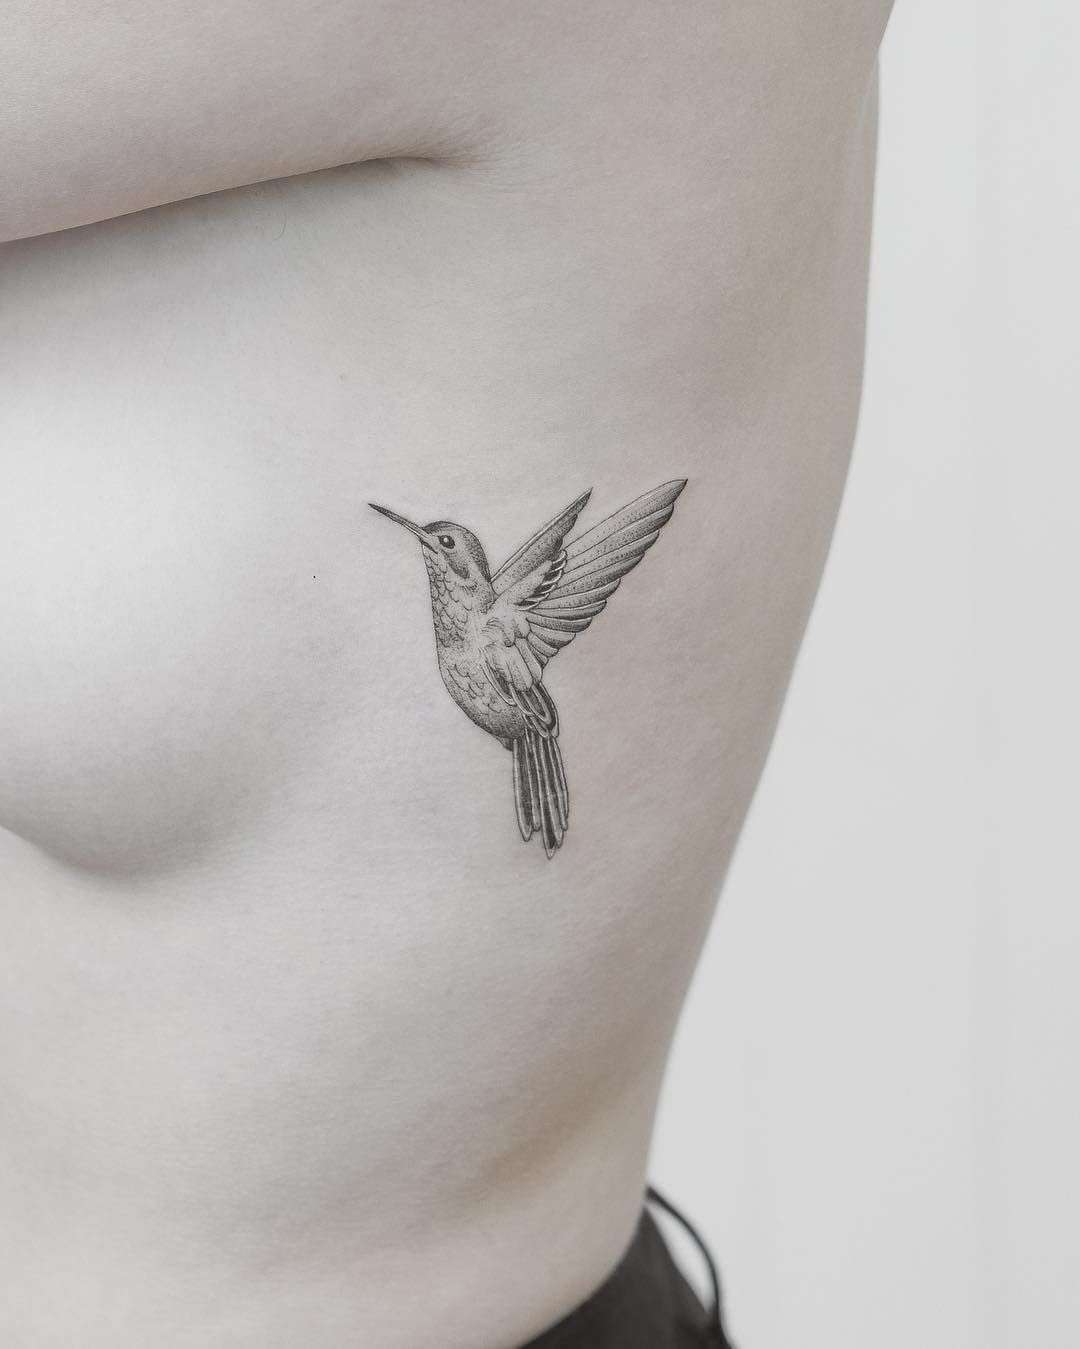 Tatuaje de colibrí en lateral